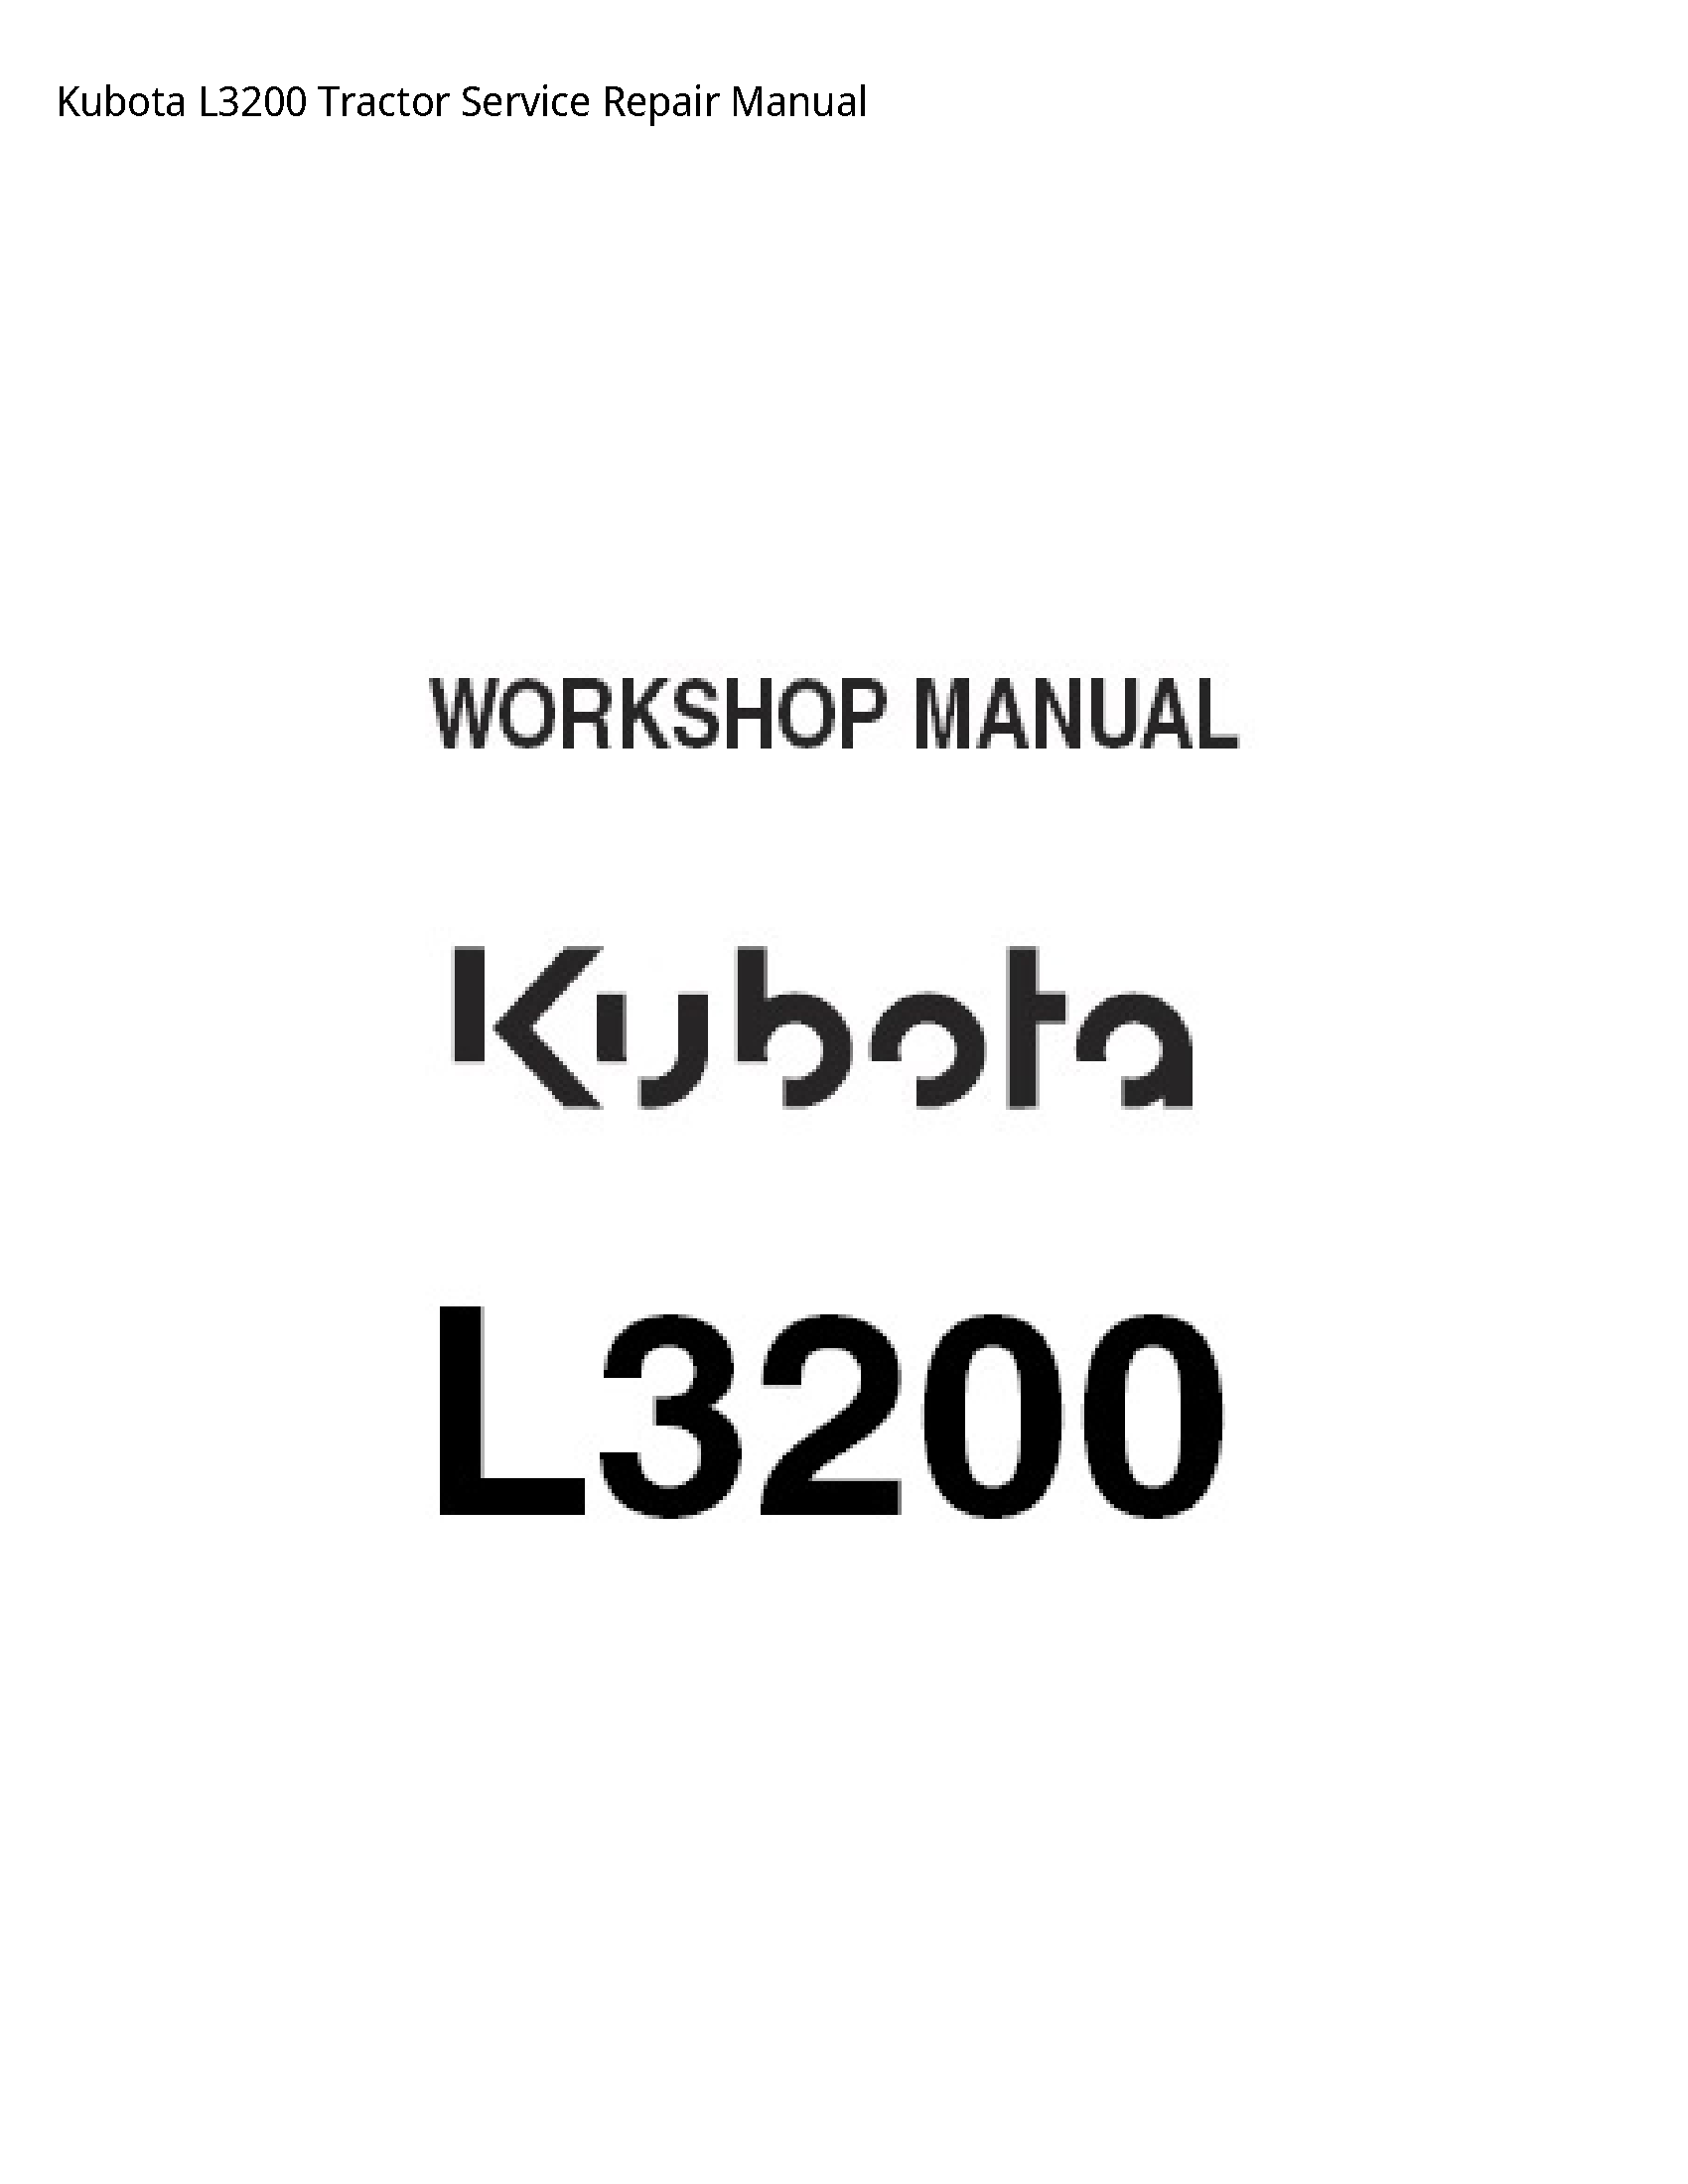 Kubota L3200 Tractor manual